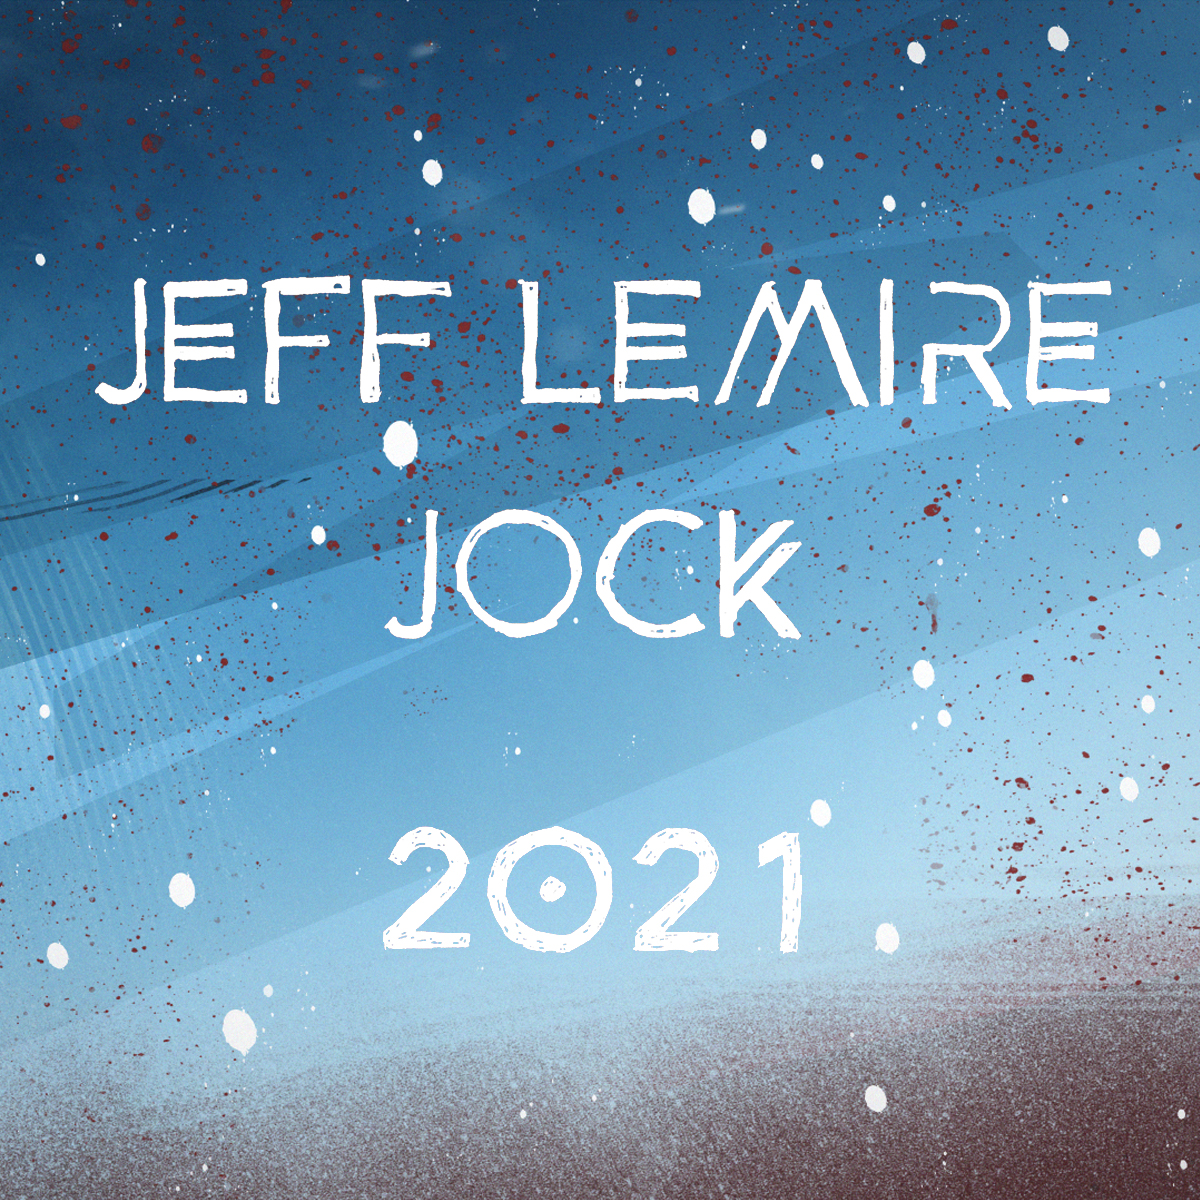 Snow Angels Jeff Lemire Jock Comixology